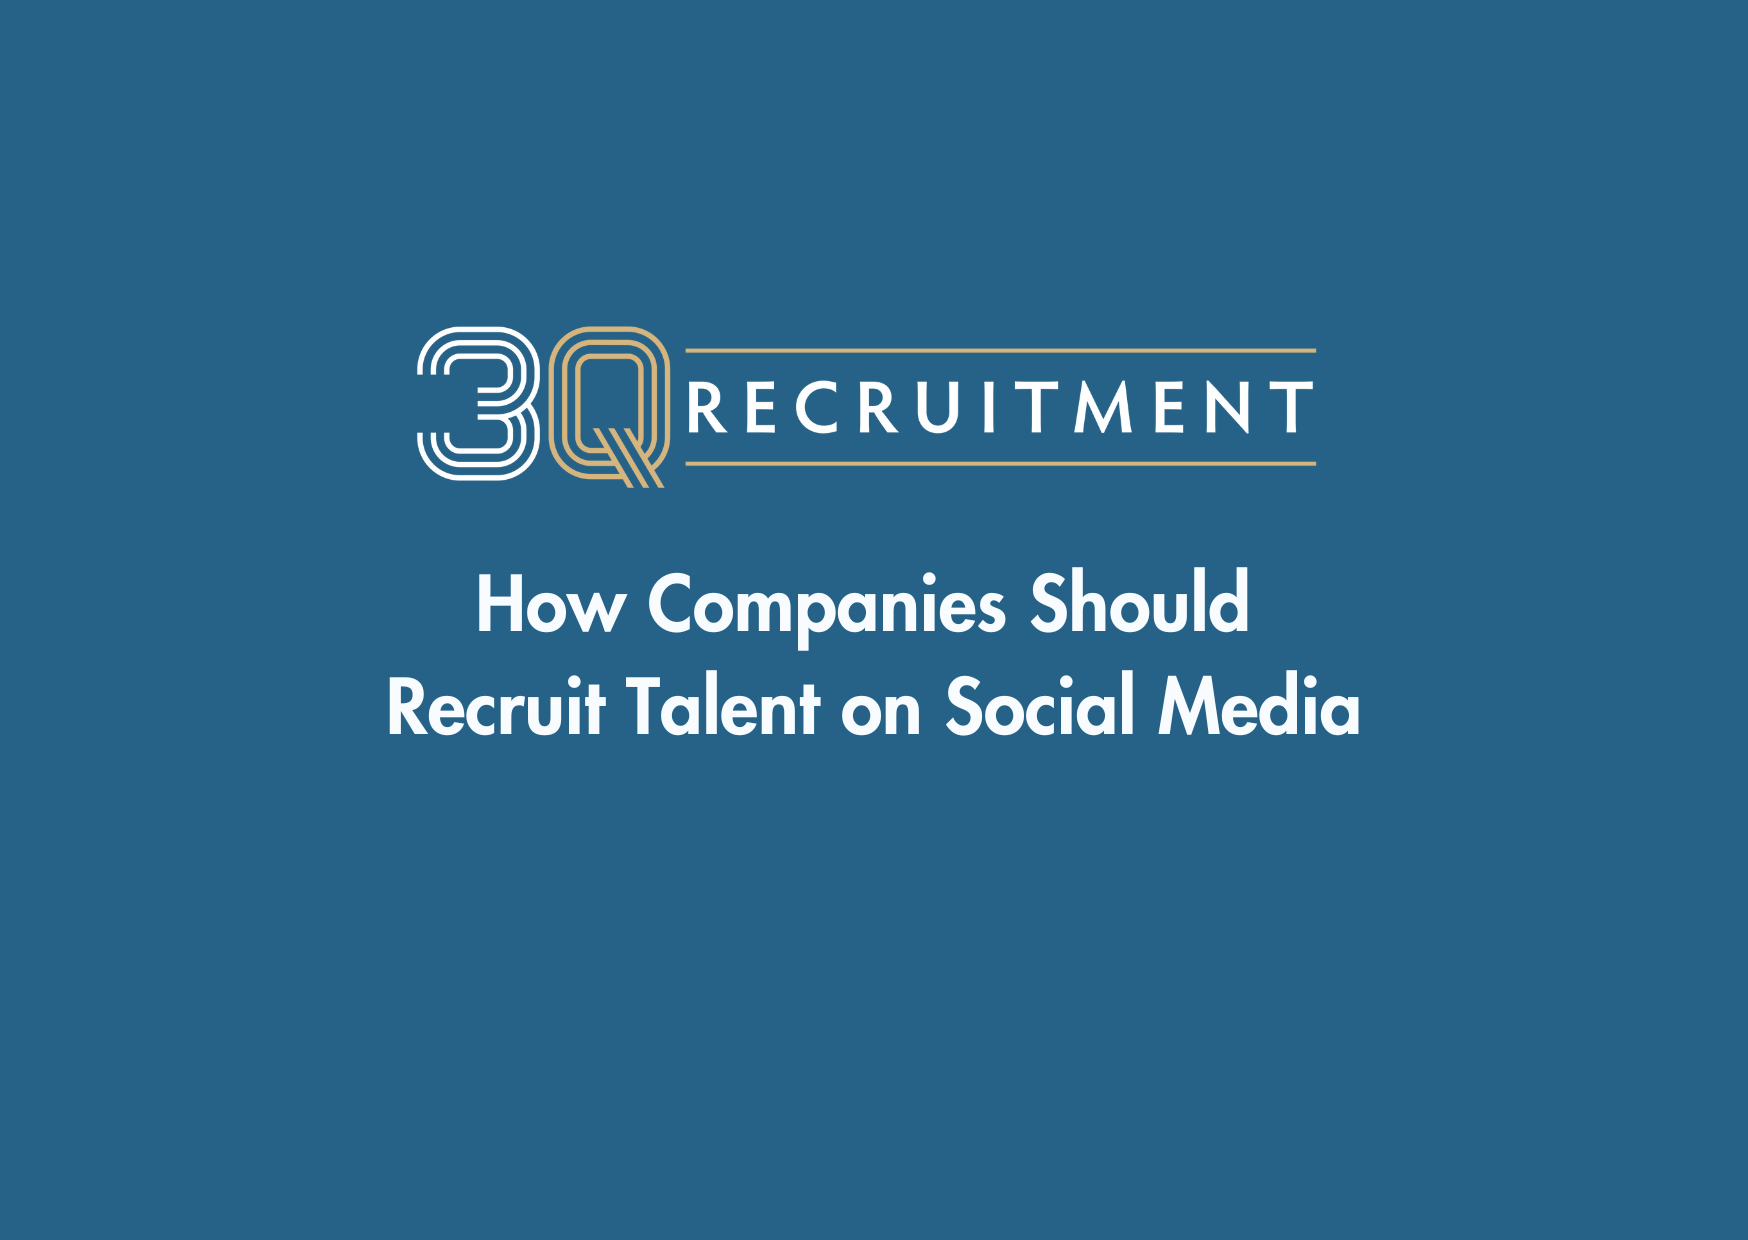 3Q Recruitment How Companies Should Recruit Talent on Social Media